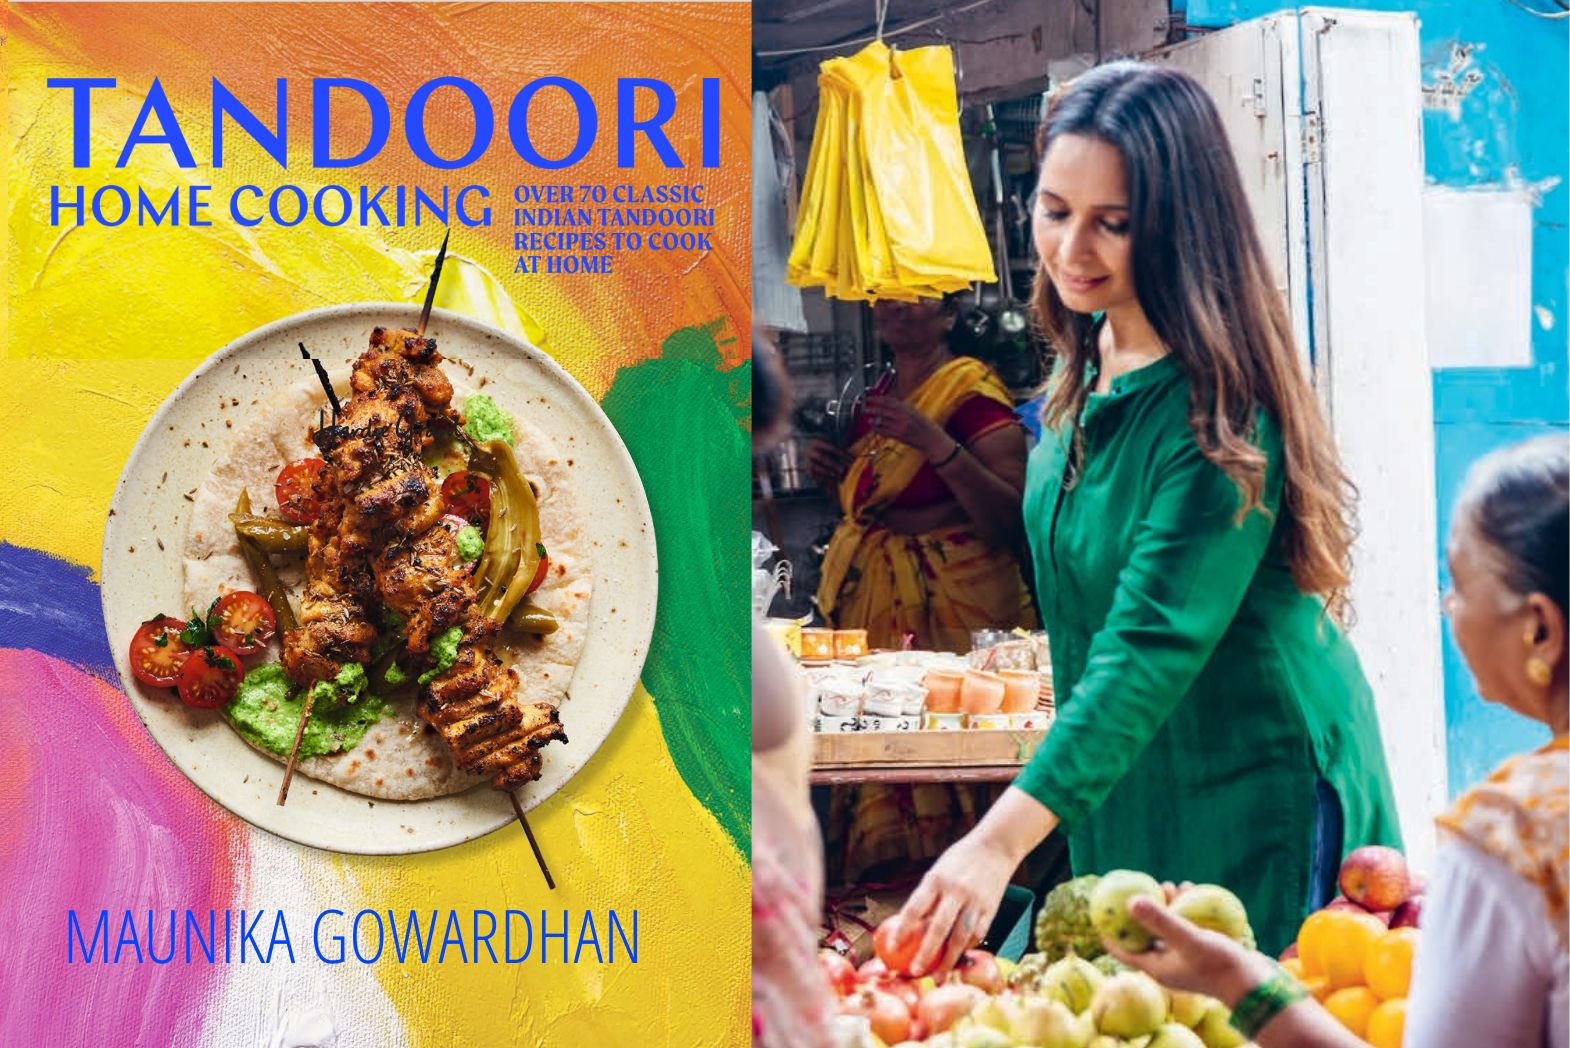 Maunika Gowardhan on Tandoori Home Cooking